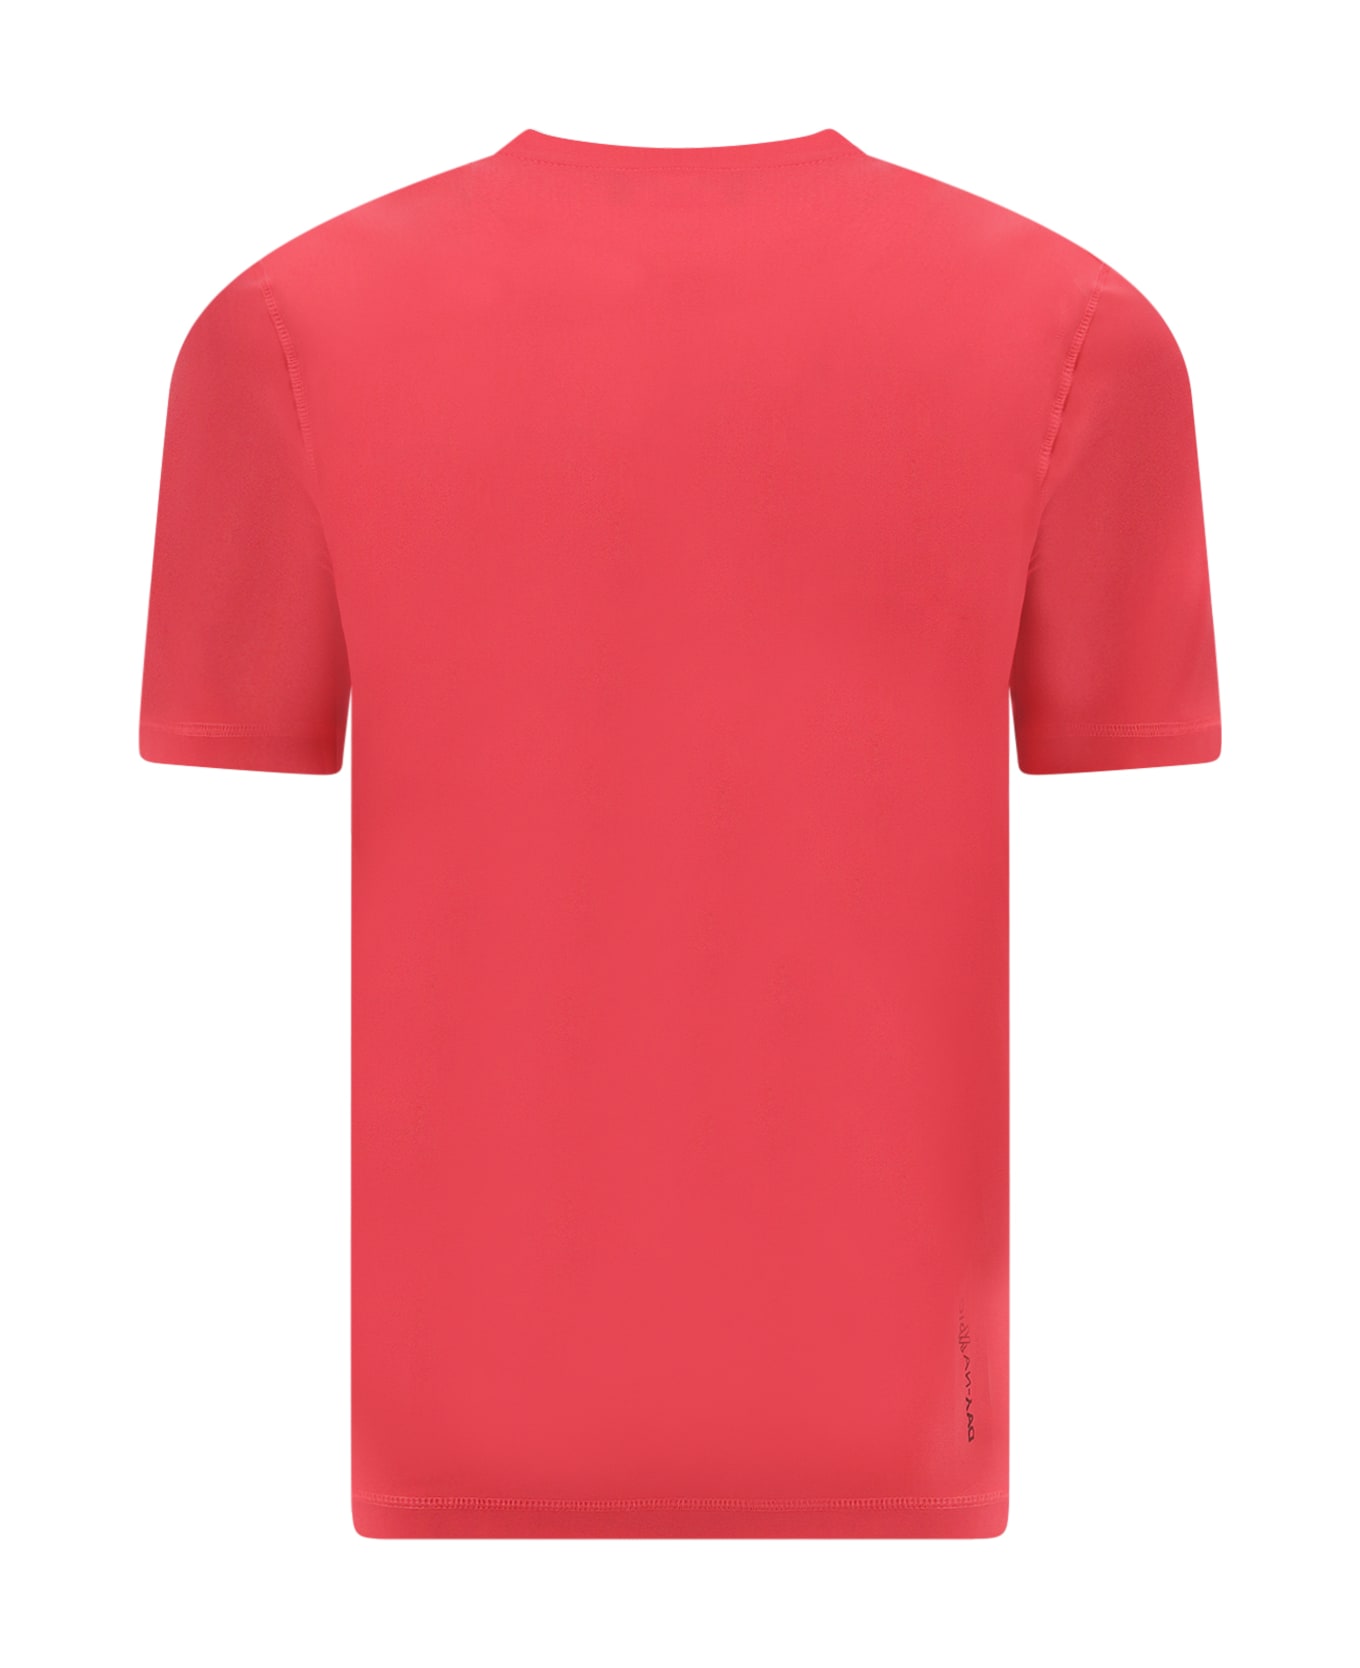 Moncler Grenoble T-shirt - Red